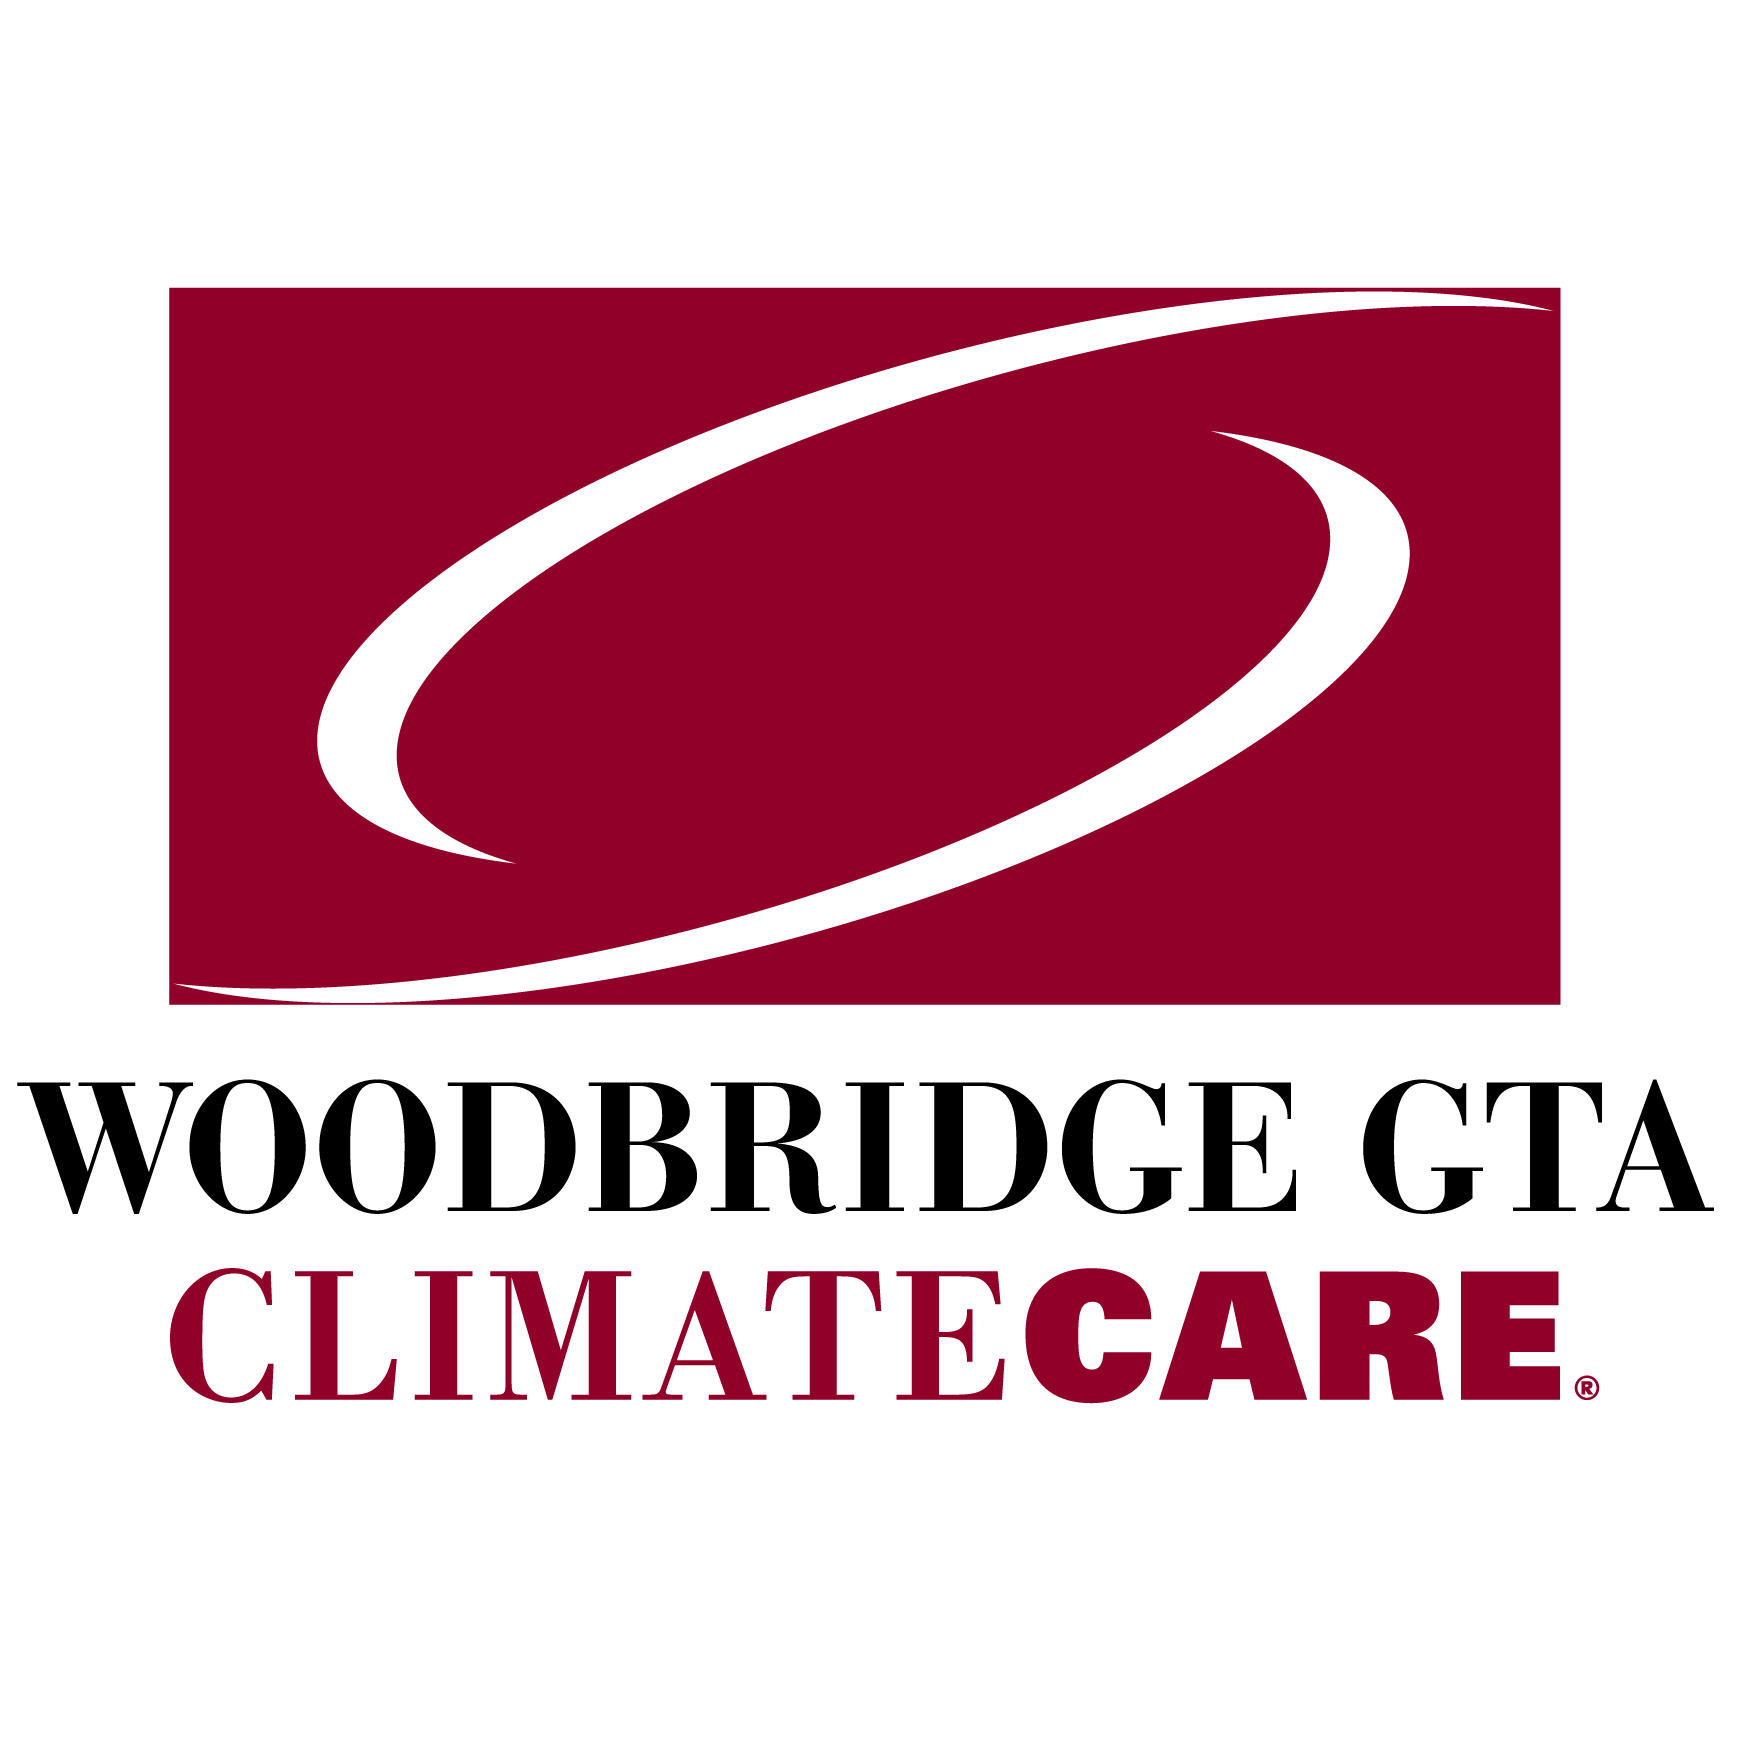 Woodbridge GTA ClimateCare